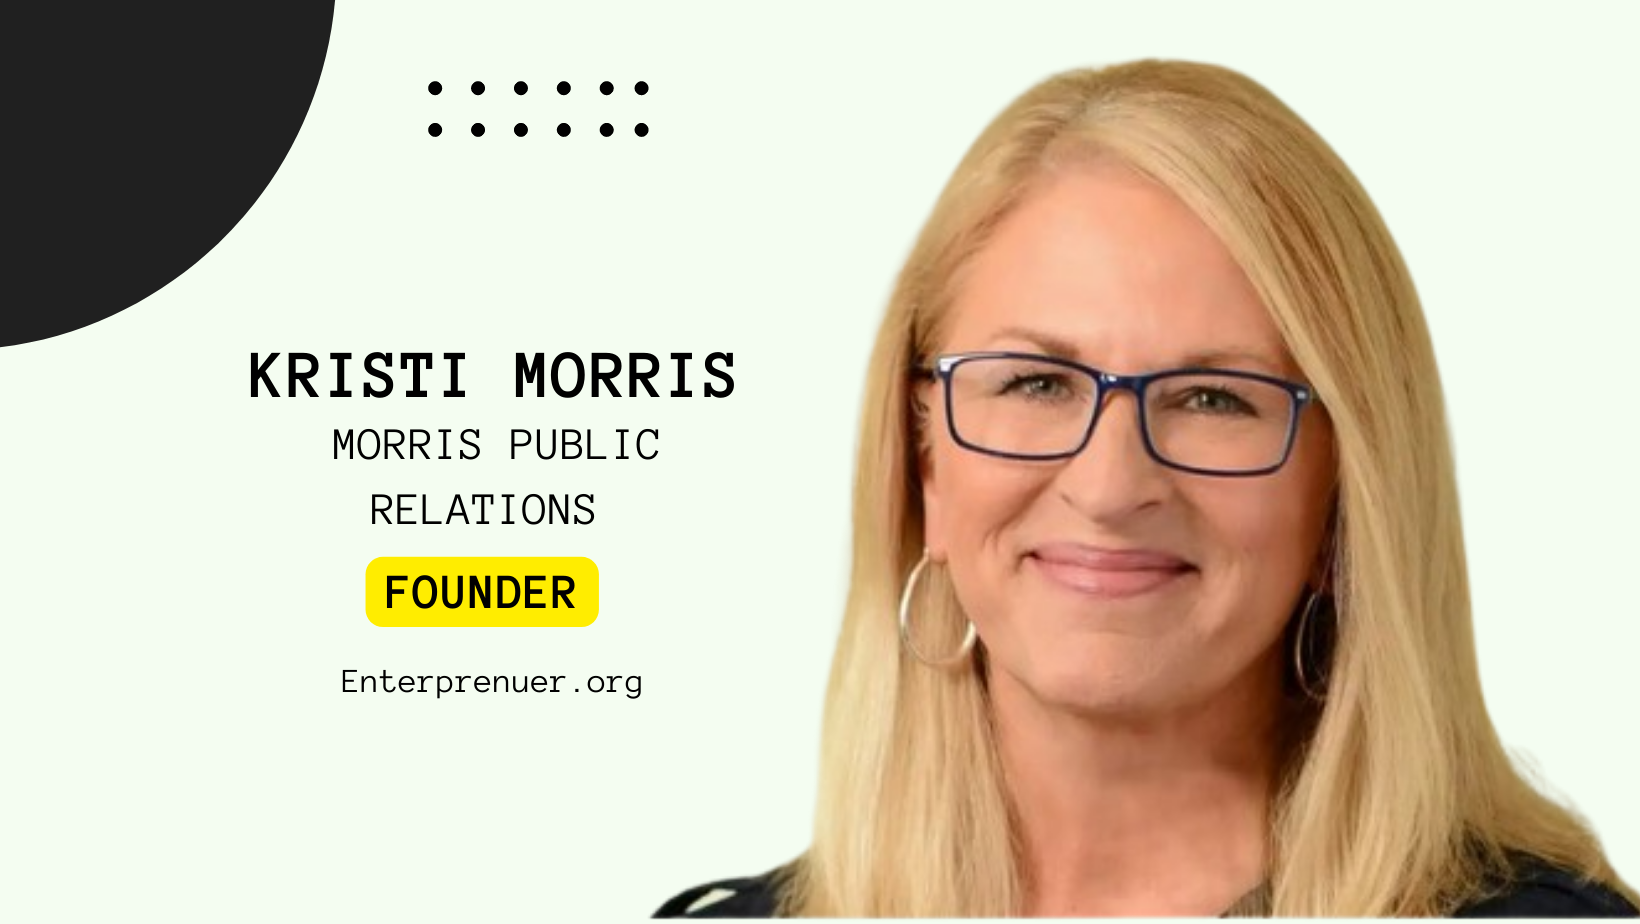 Kristi Morris Founder of Morris Public Relations